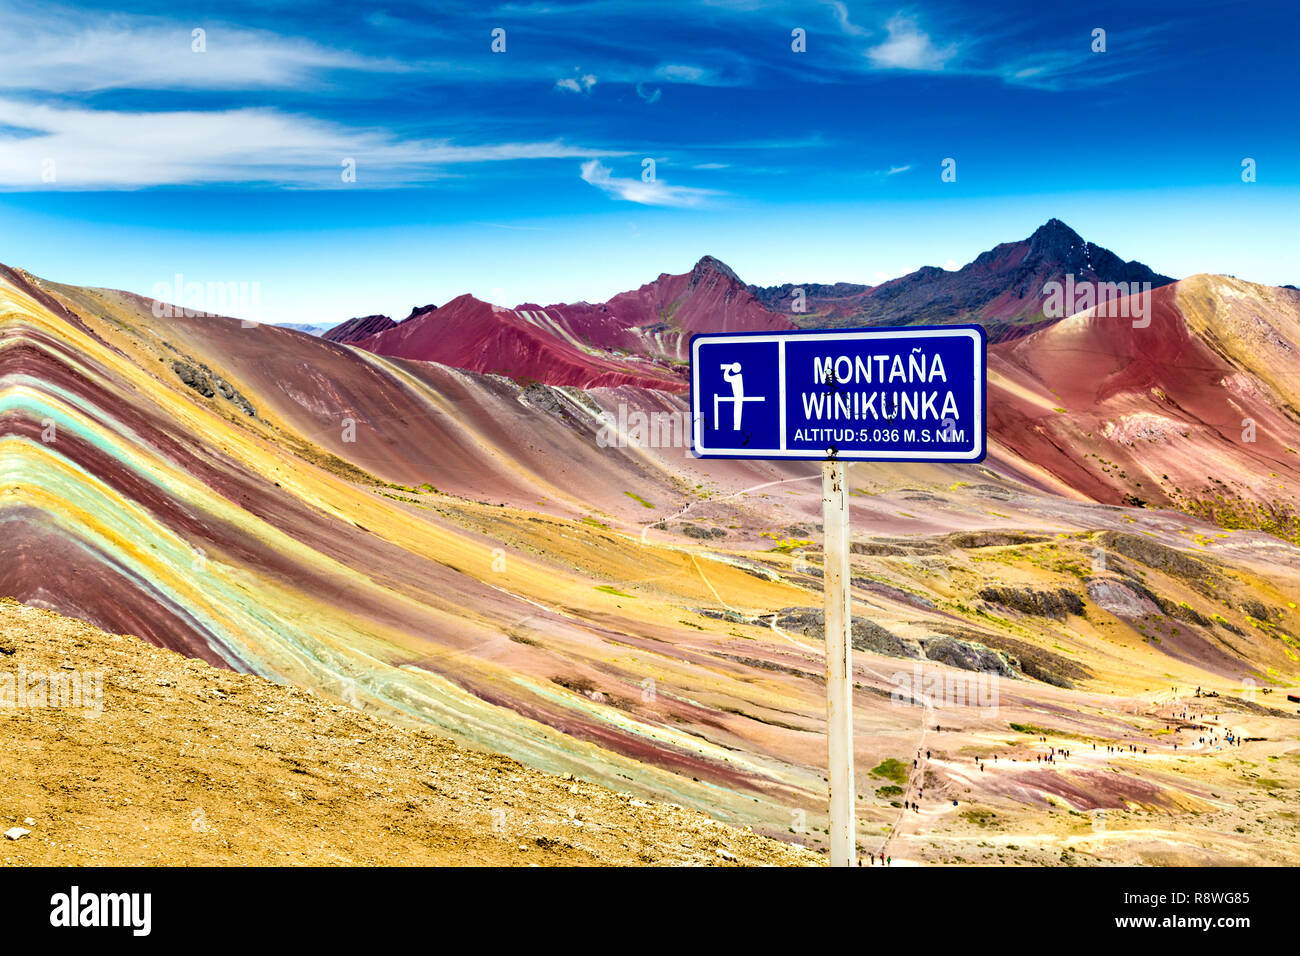 Sign with the name of mountain Vinicunca ' Montana Winikunka' at altitude 5036m, Rainbow Mountain, Cusco, Peru Stock Photo